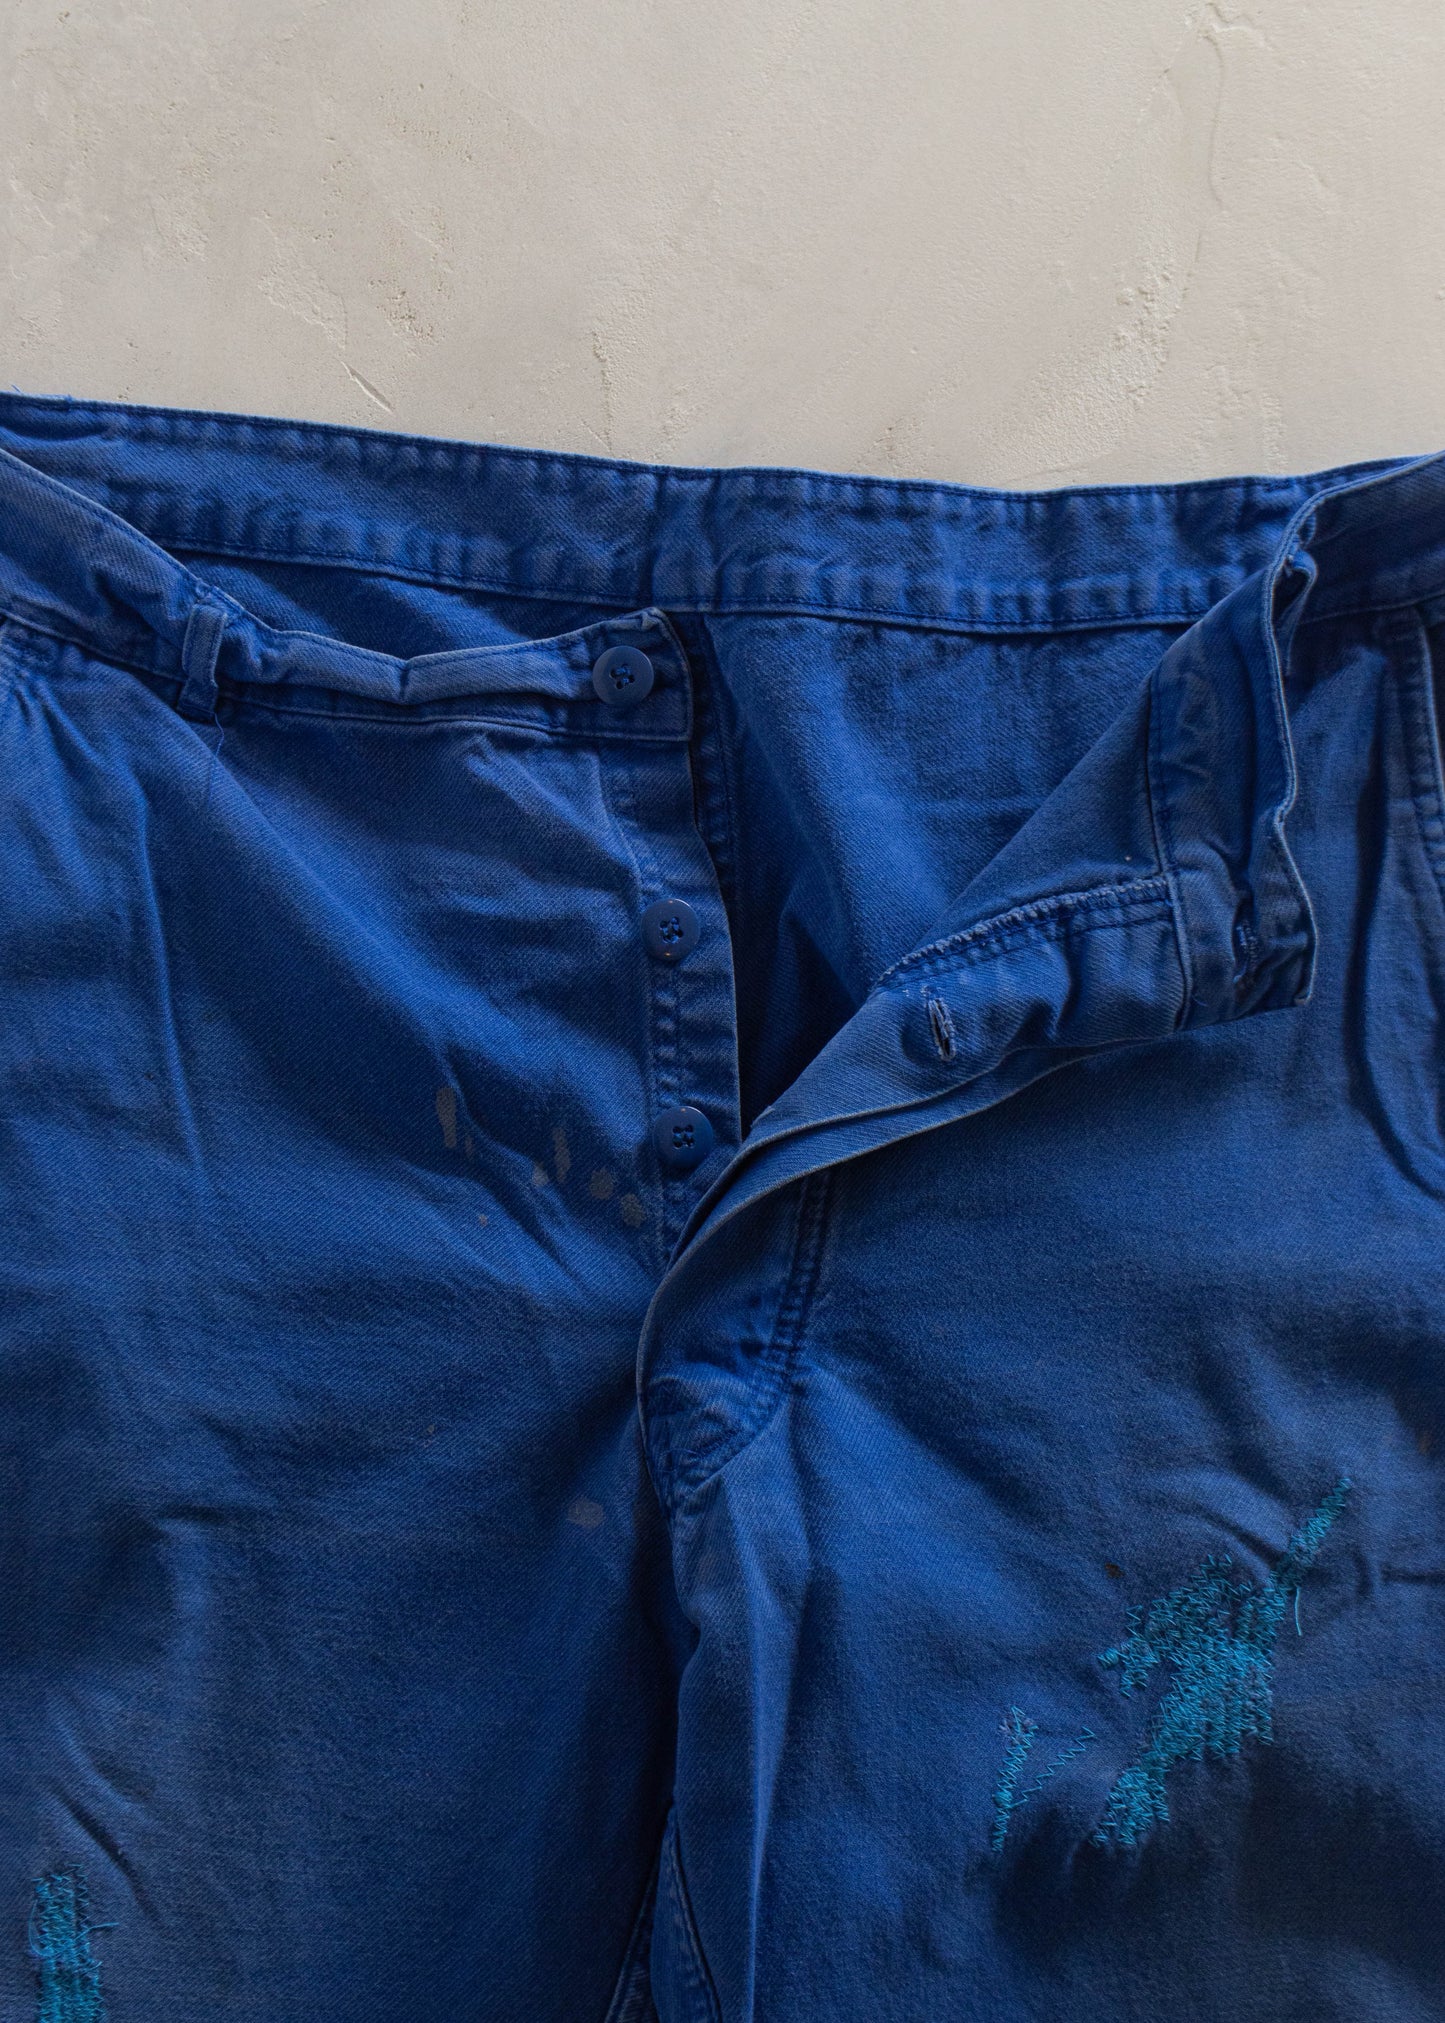 1980s French Workwear Chore Pants Size Women's 36 Men's 38